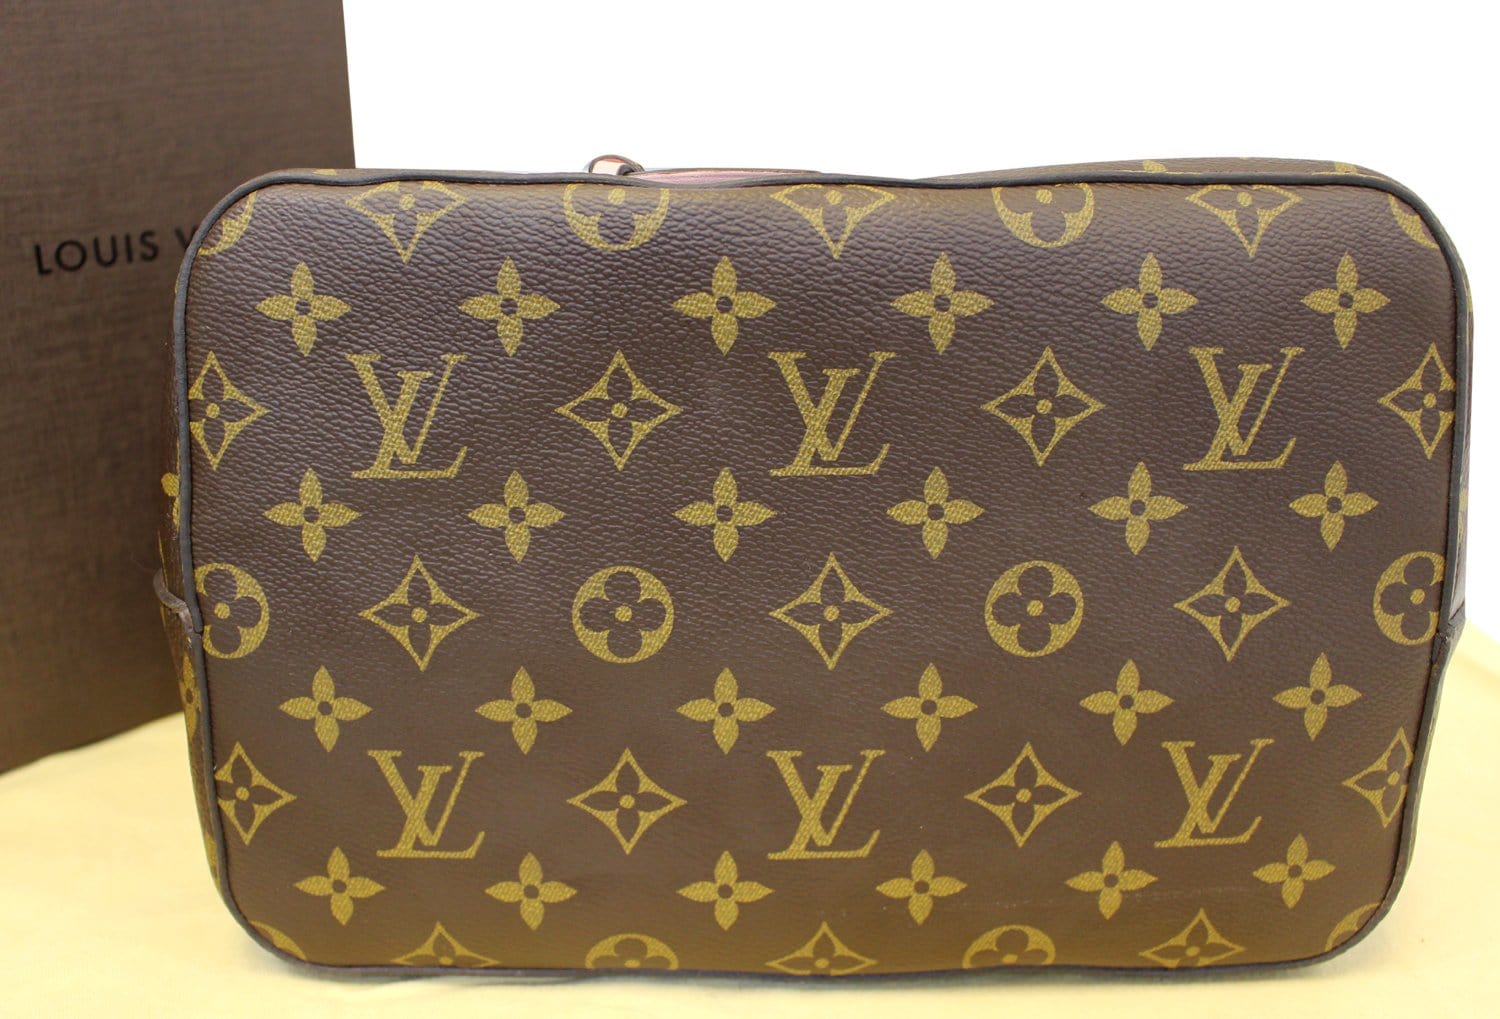 Chanel - Louis Vuitton, Sale n°2783, Lot n°373